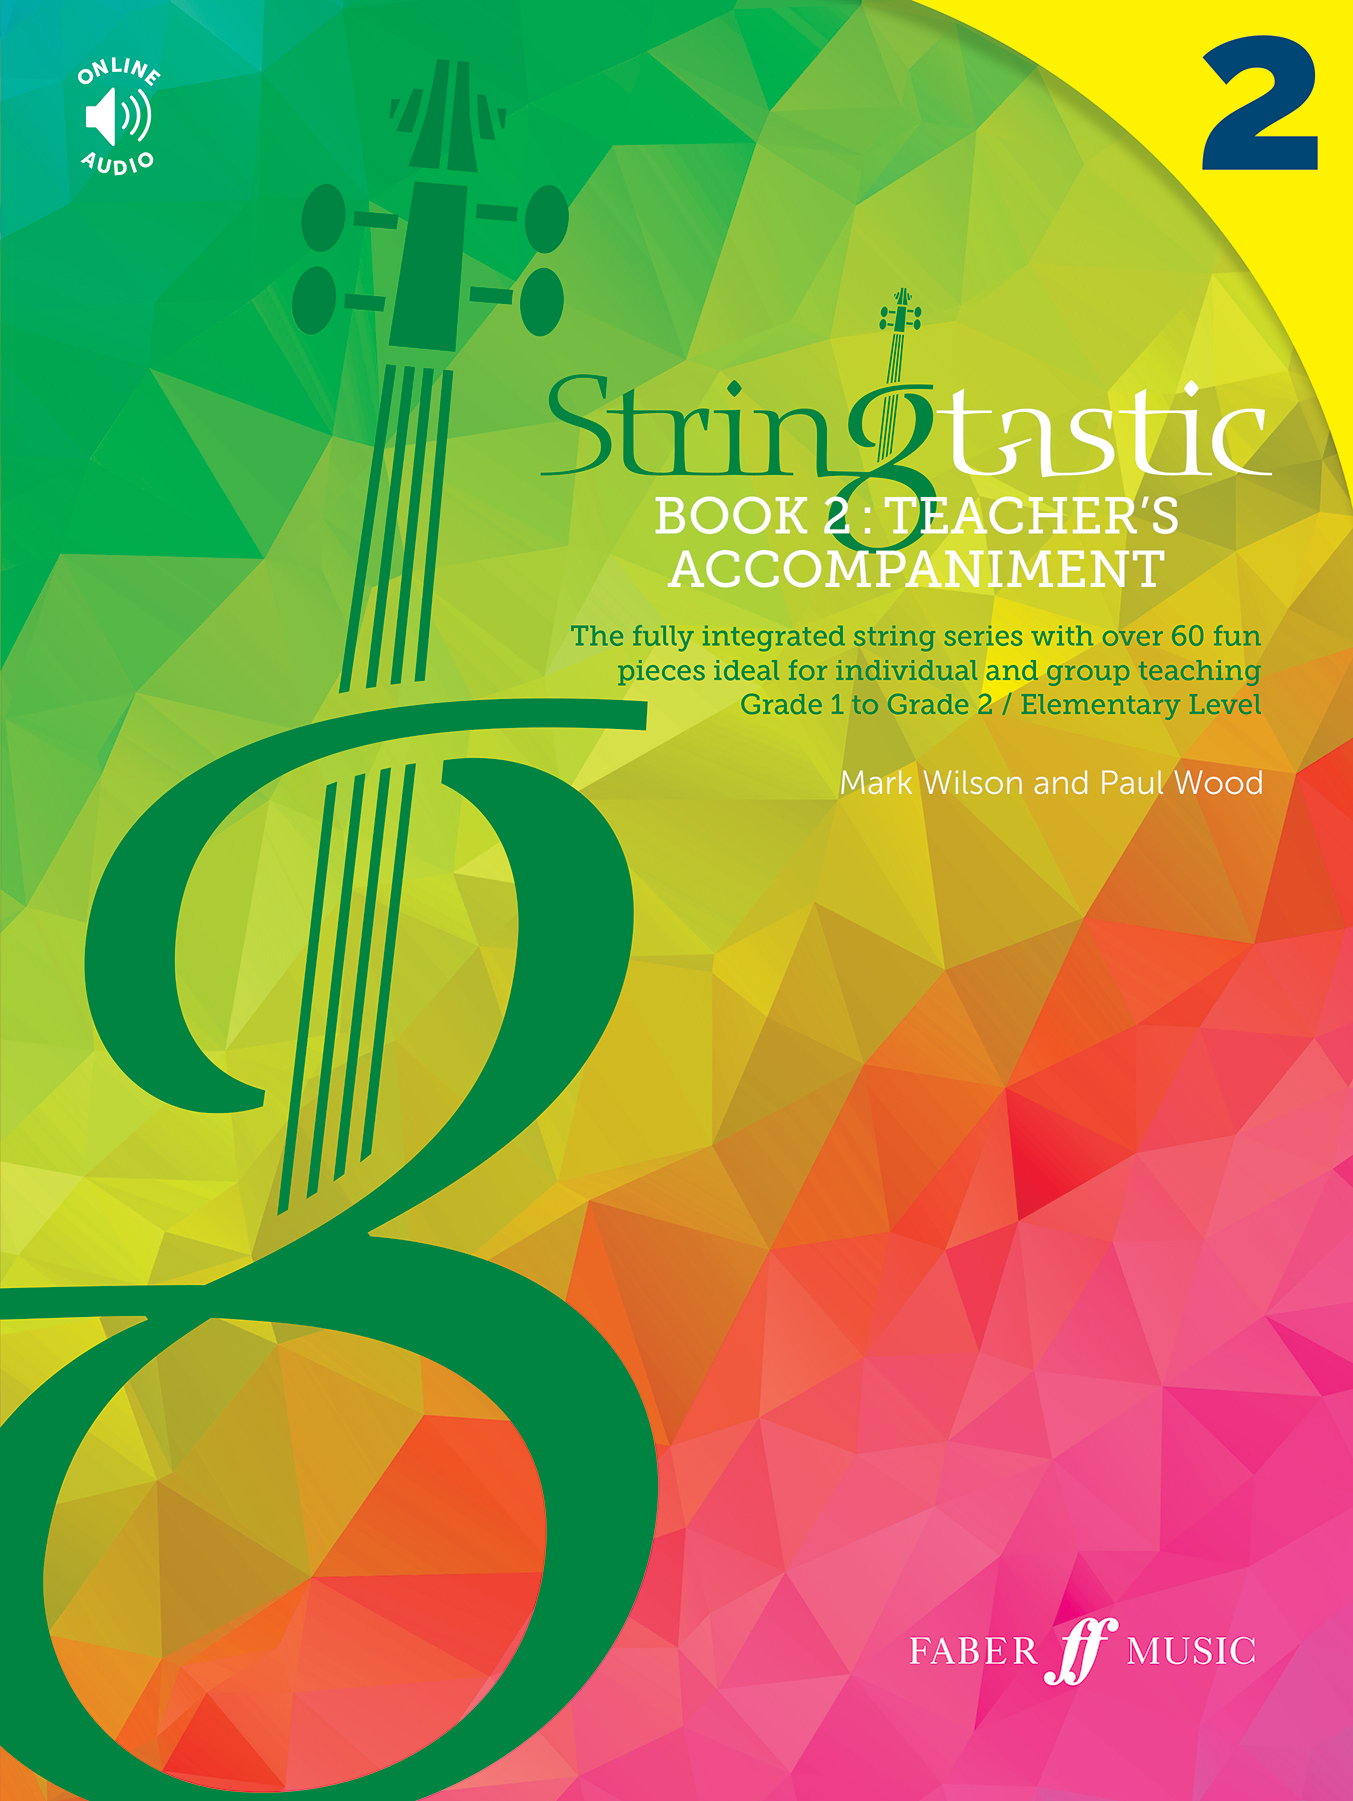 Stringtastic Book 2 Teachers Accompaniment Sheet Music Songbook